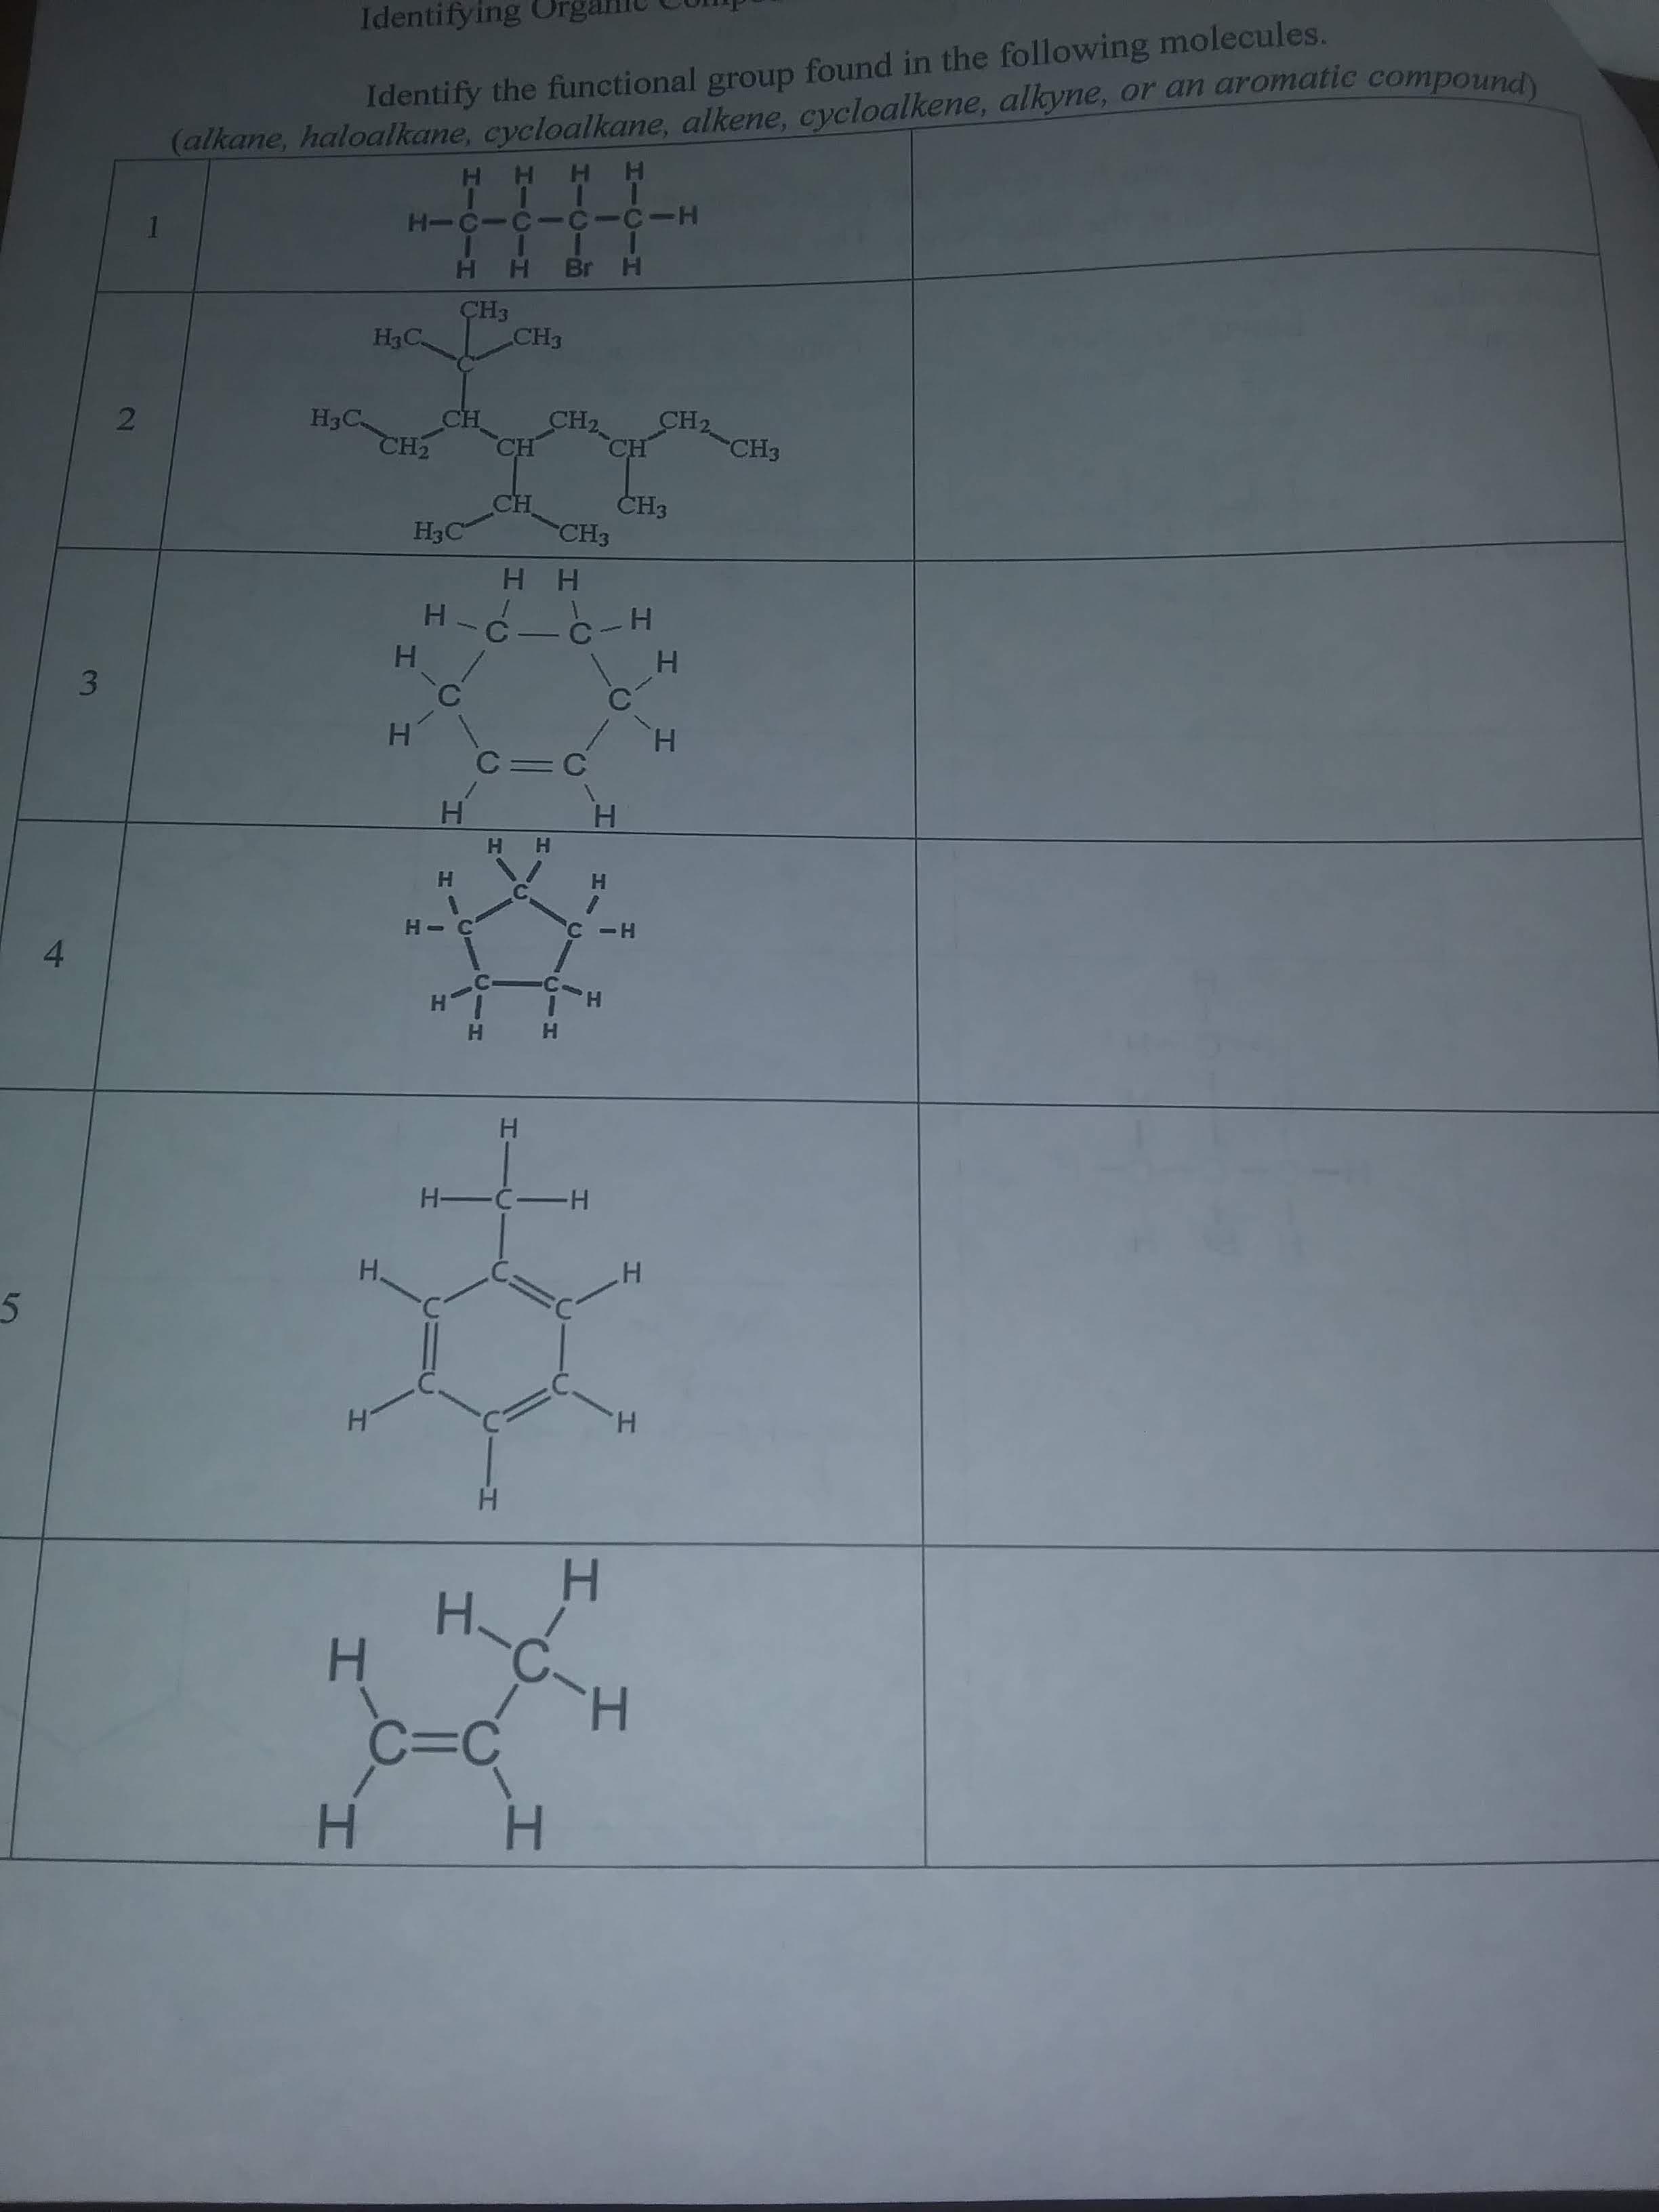 Identify the functional group found in the following molecules.
(alkane, haloalkane, cycloalkane, alkene, cycloalkene, alkyne, or an aromatic compound
HH
H-C-C-C-C-H
HH BrH
CH3
CH3
HạC CH
CH CH
CH
H3CCH2
CH2
CH
CH
CH3
CH
ČH3
H3C
CH3
H H
C
H.
3
H.
C=C
H.
H H
H.
H
H- C
CC-H
H
H -C-H
H.
H.
H.
H.
H.
C=C
H.
2.
